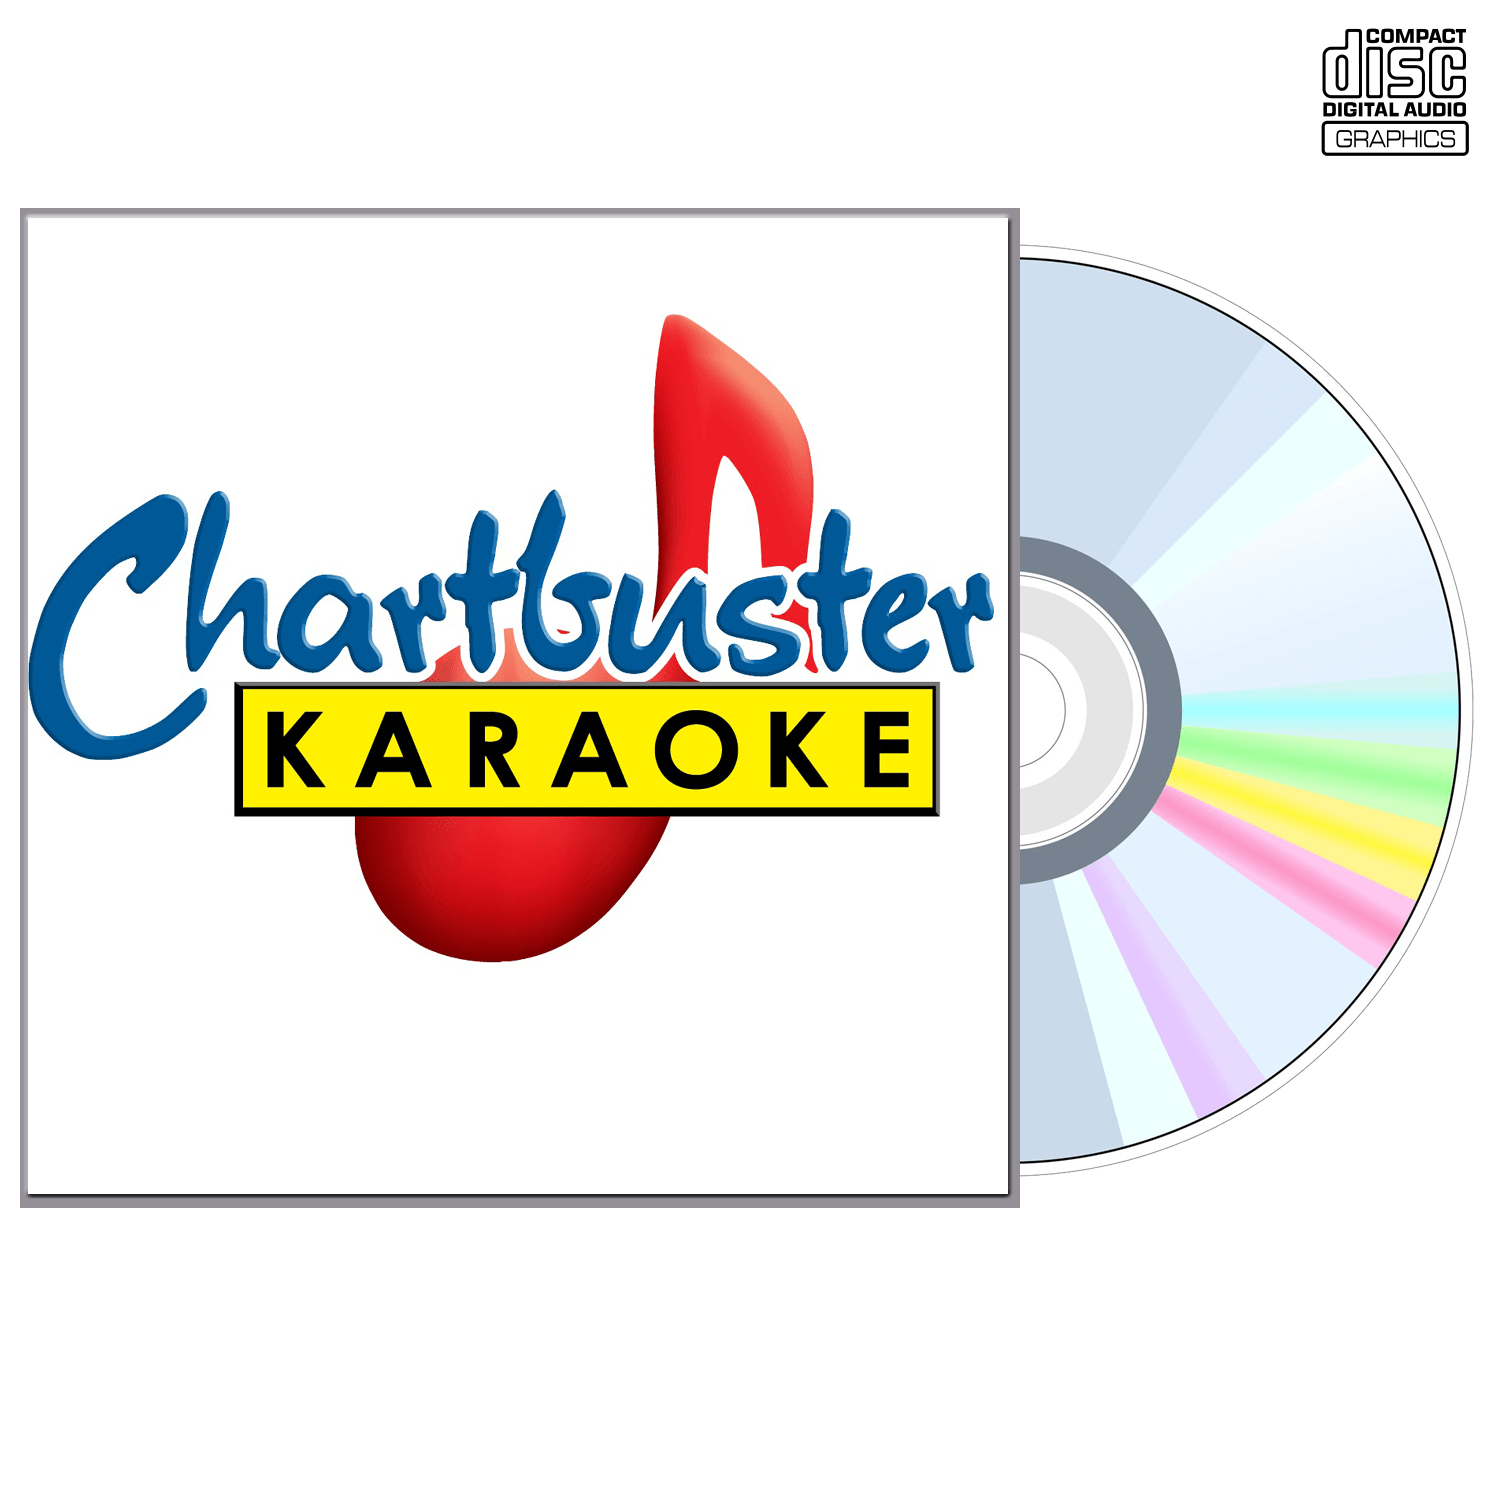 Darryl Worley- CD+G - Chartbuster Karaoke - Karaoke Home Entertainment